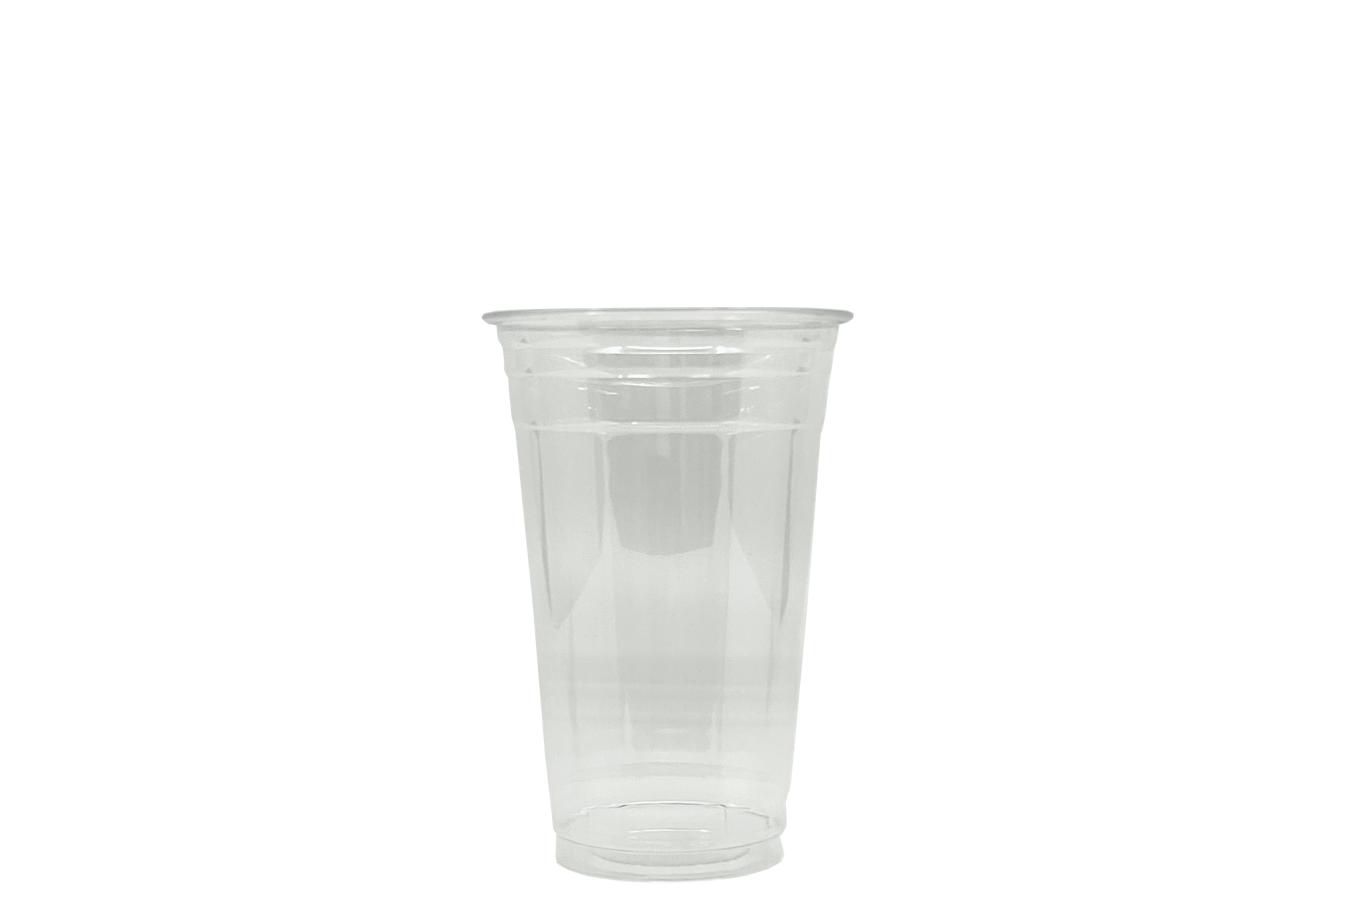 Ecopax-PET-Cups-PECC20-20oz-size